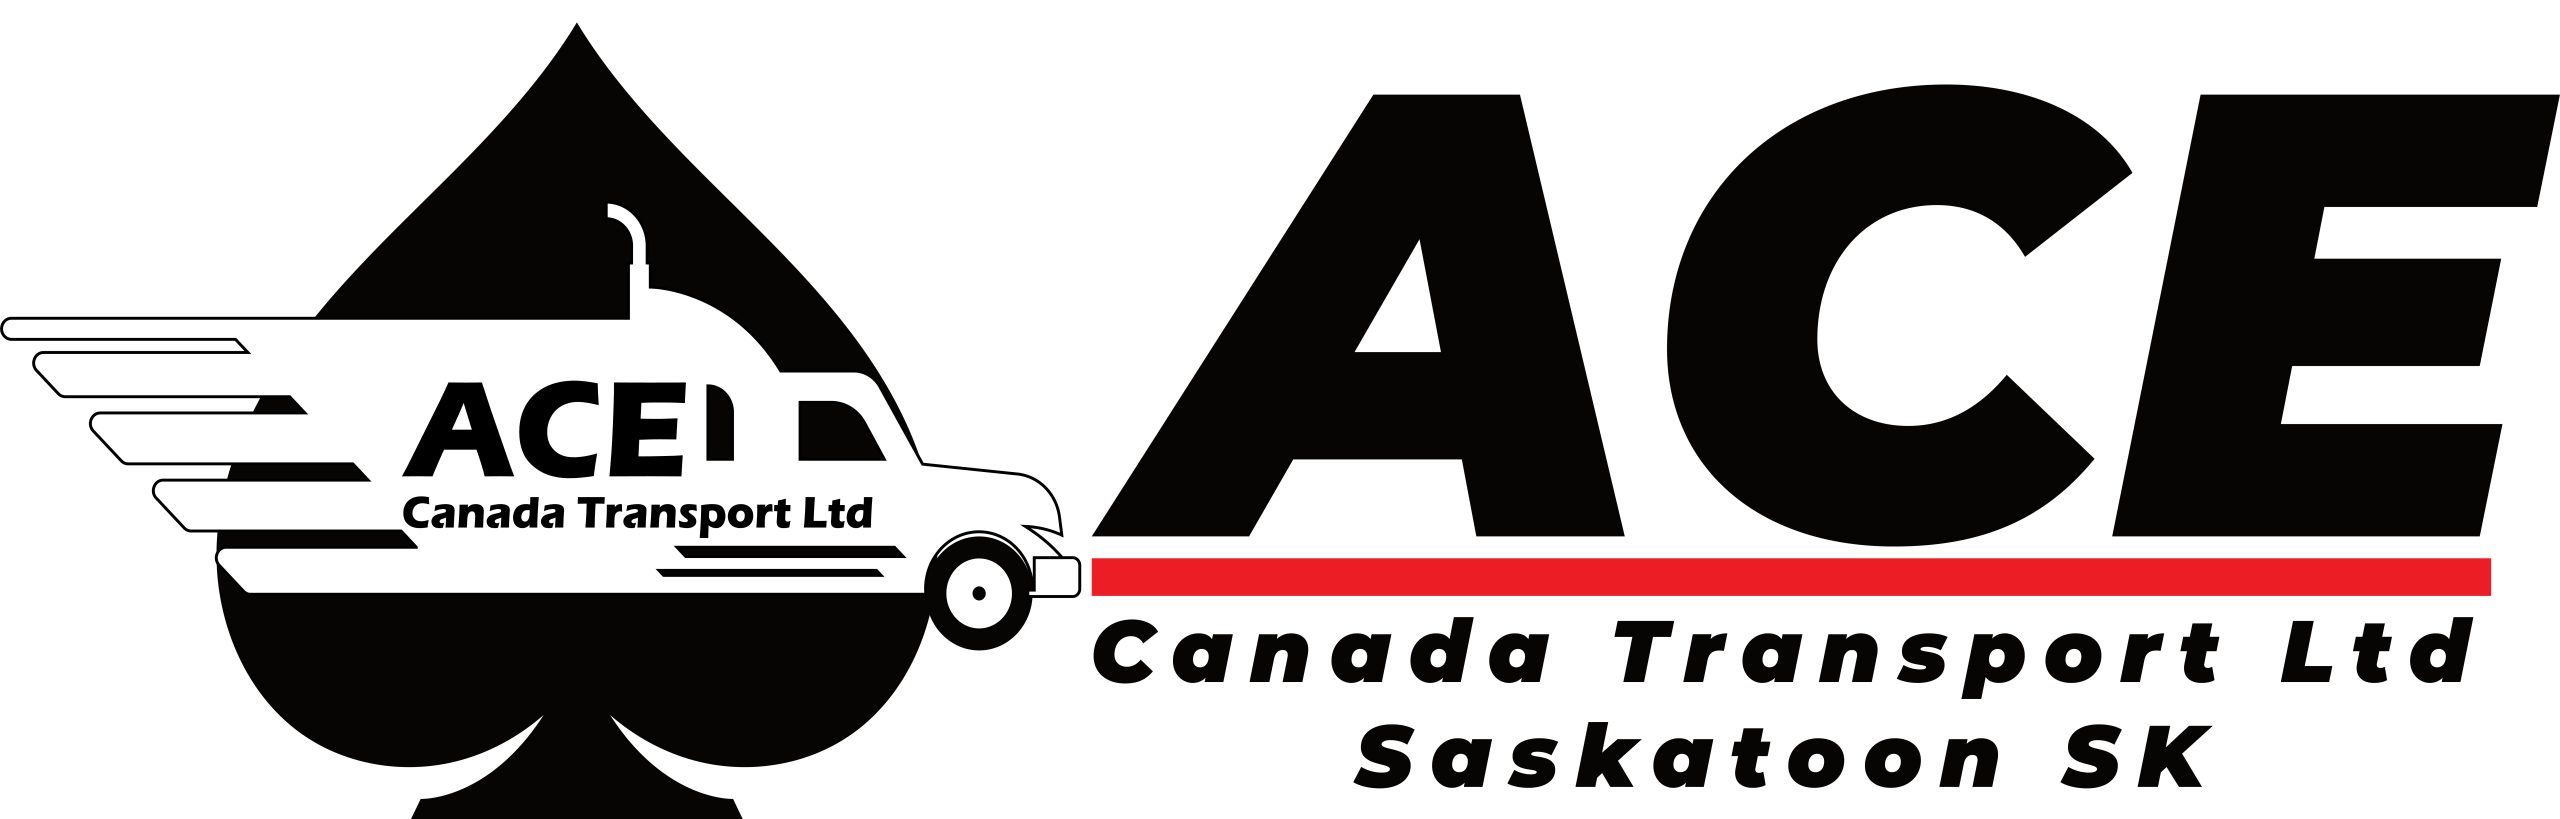 Ace Canada Transport logo